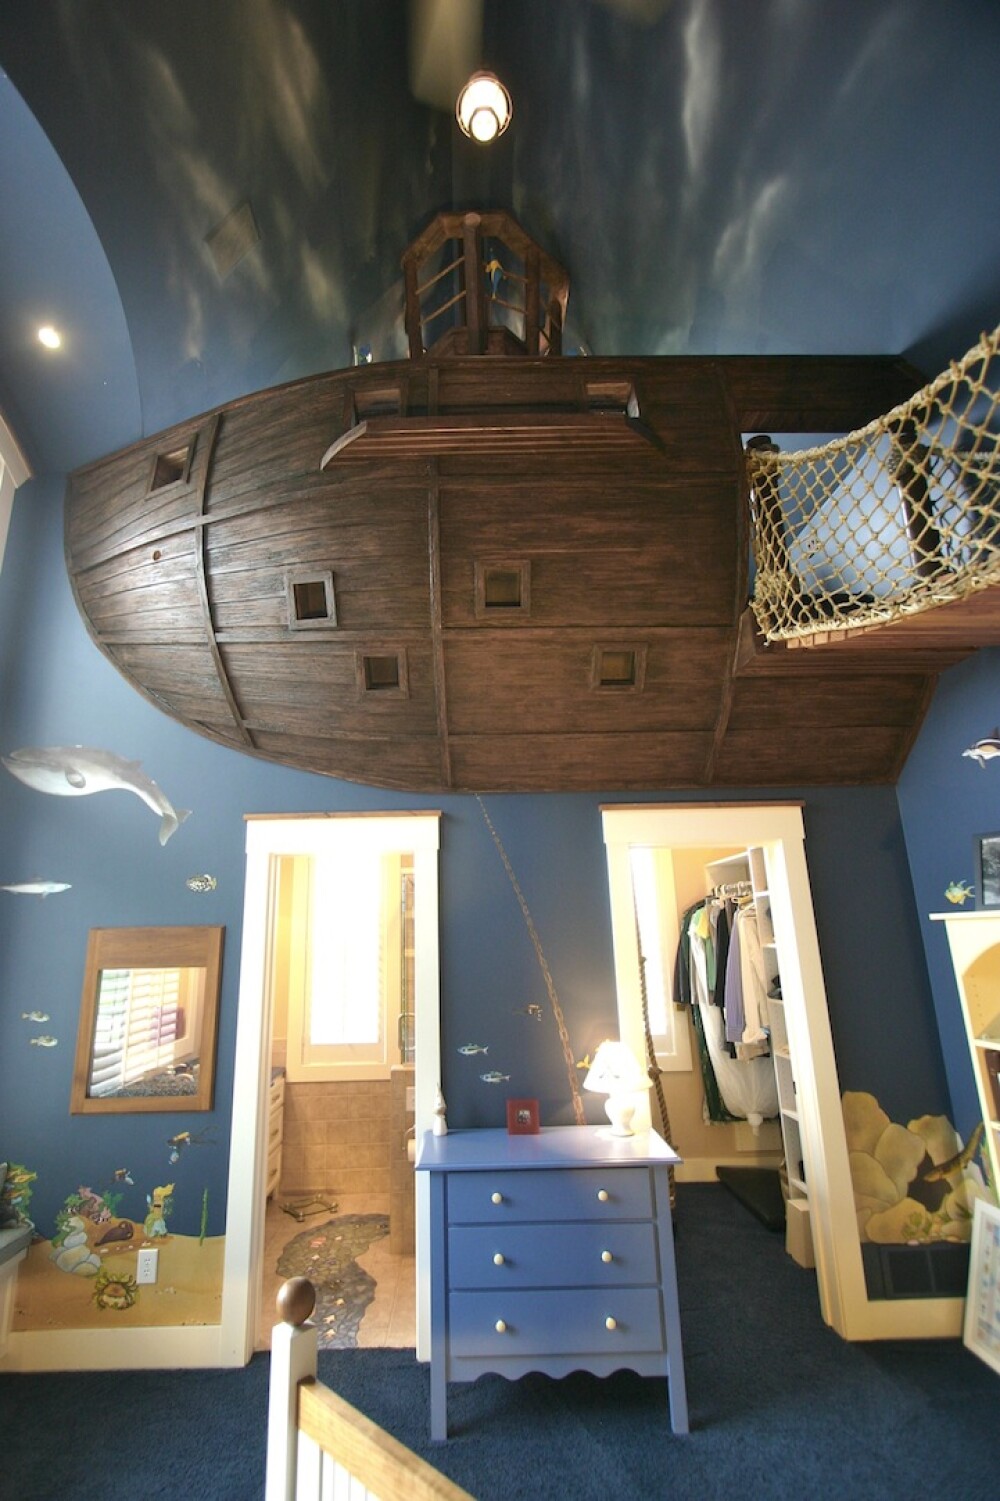 Dormitorul sub forma unei nave-pirat. GALERIE FOTO - Imaginea 2